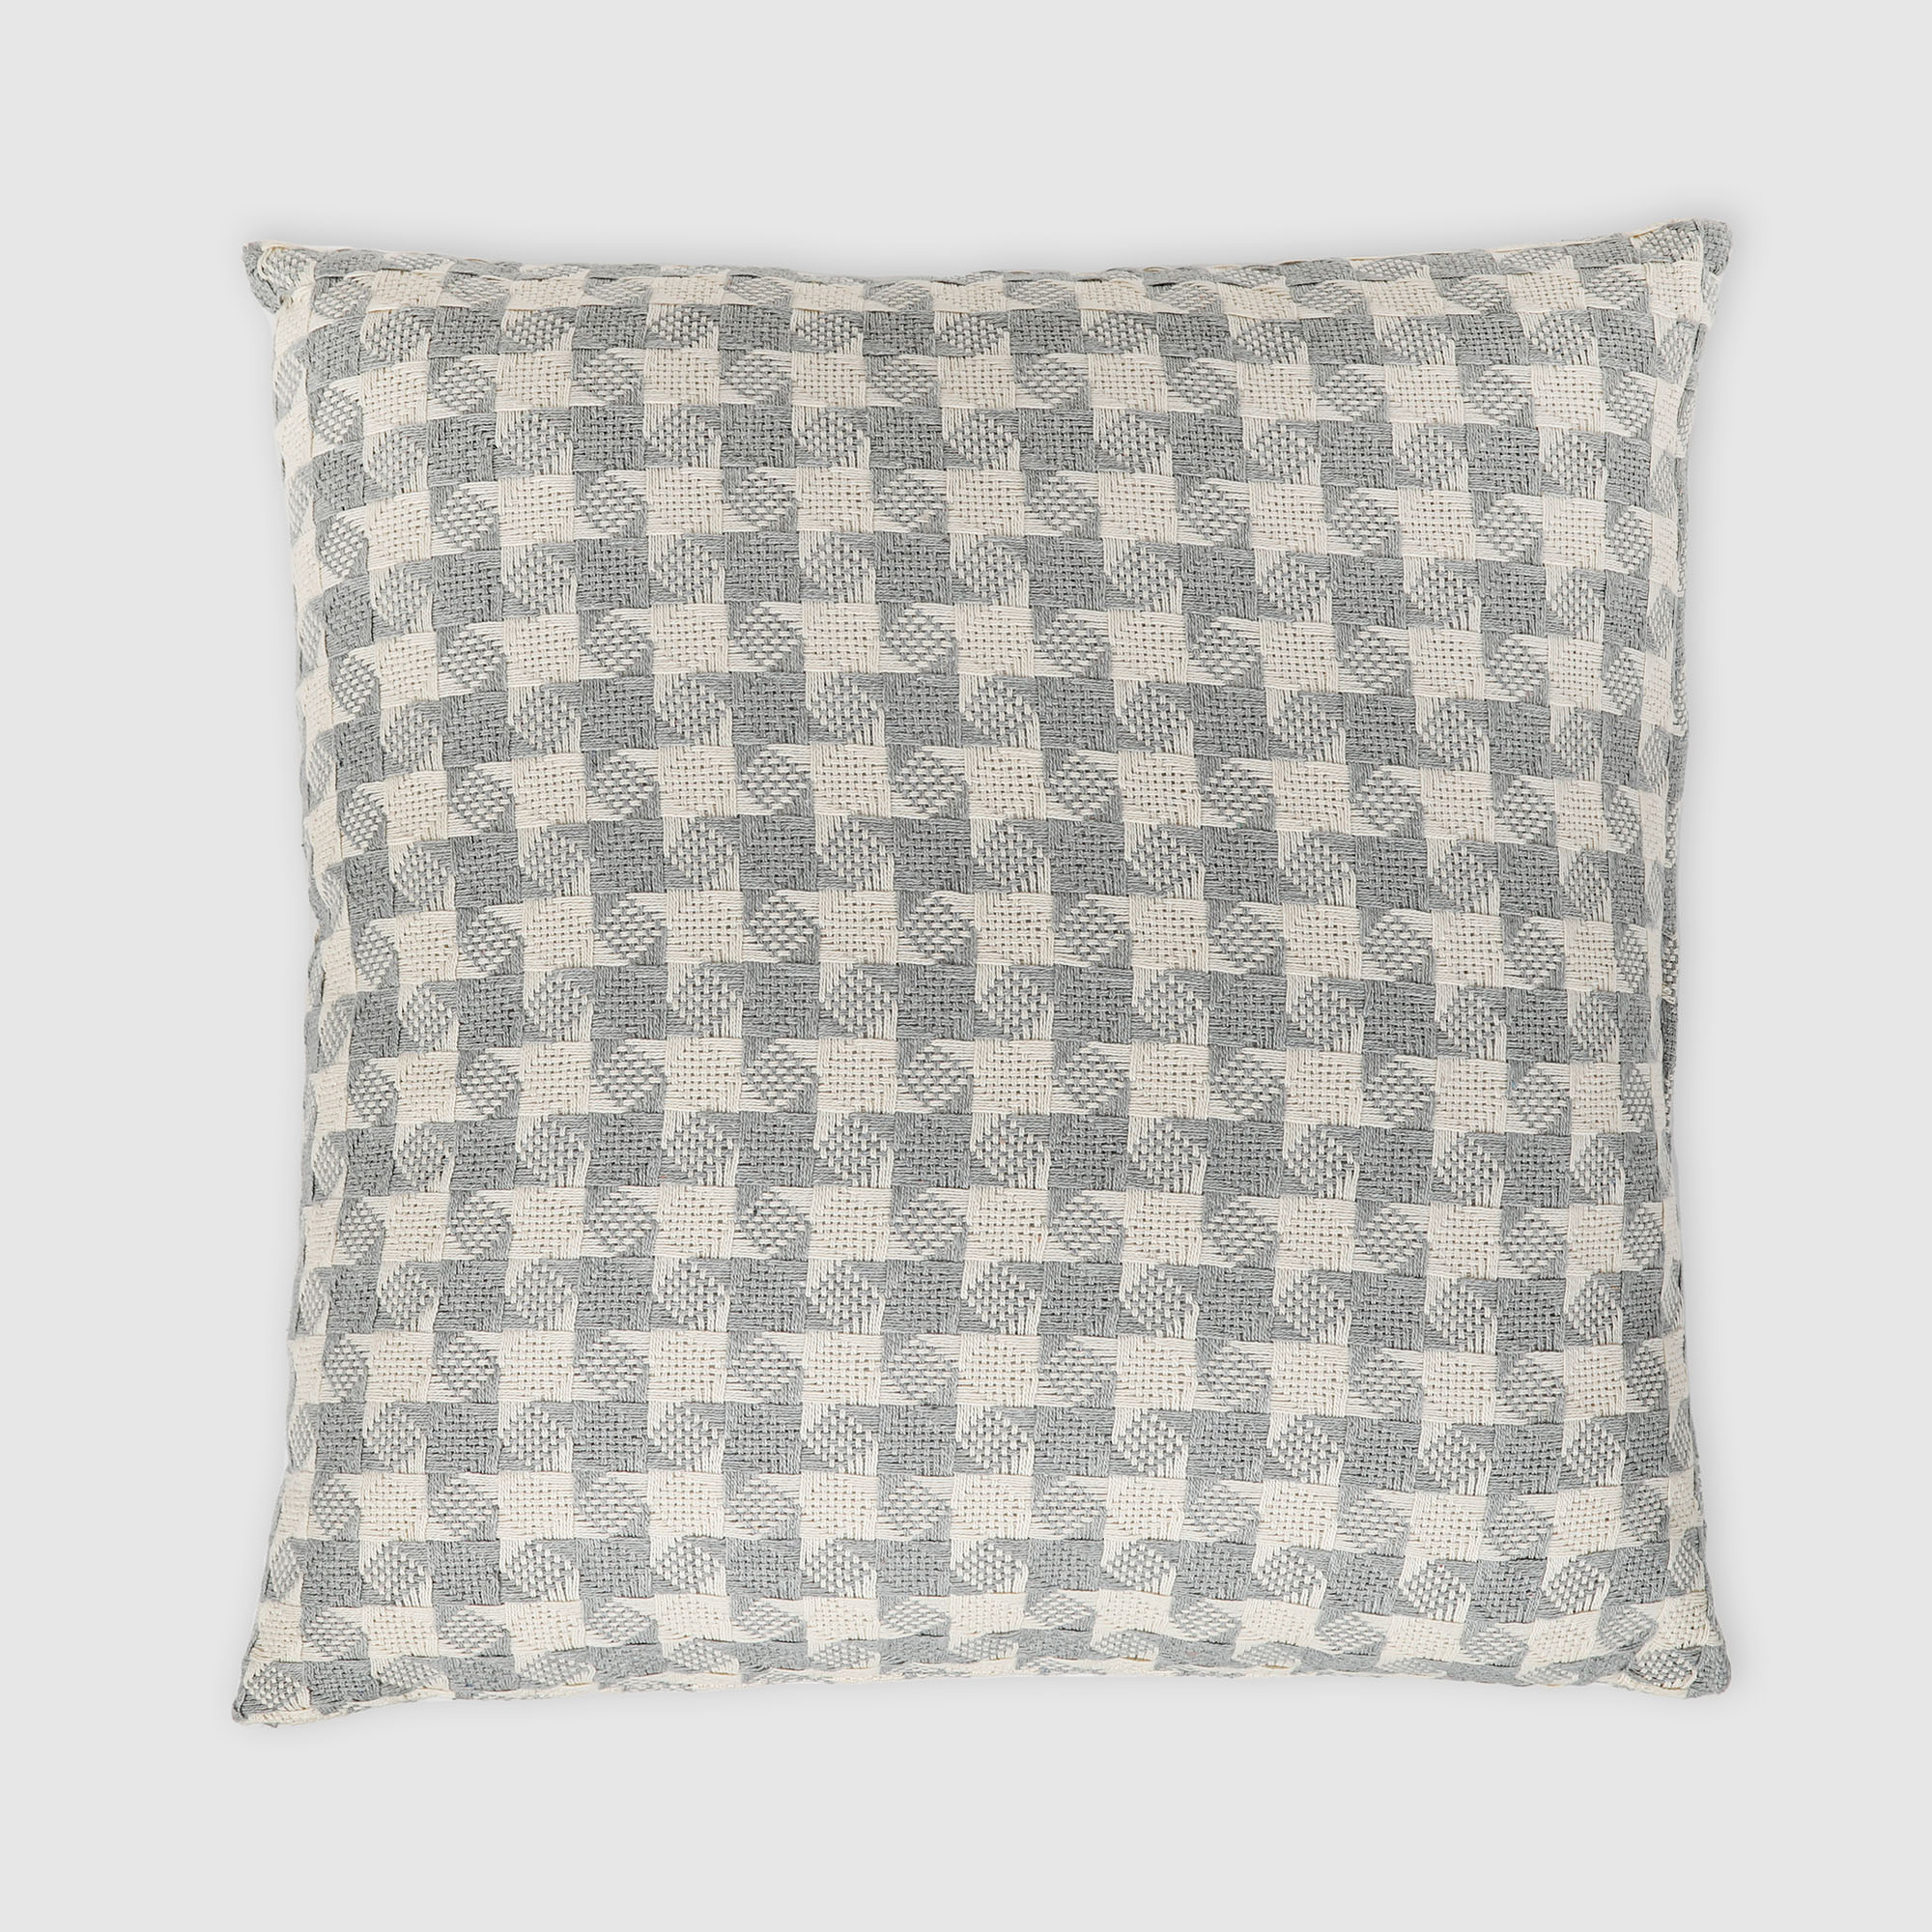 Подушка Homelines textiles Peid-de-Poule grey серая 45х45 см, цвет серый